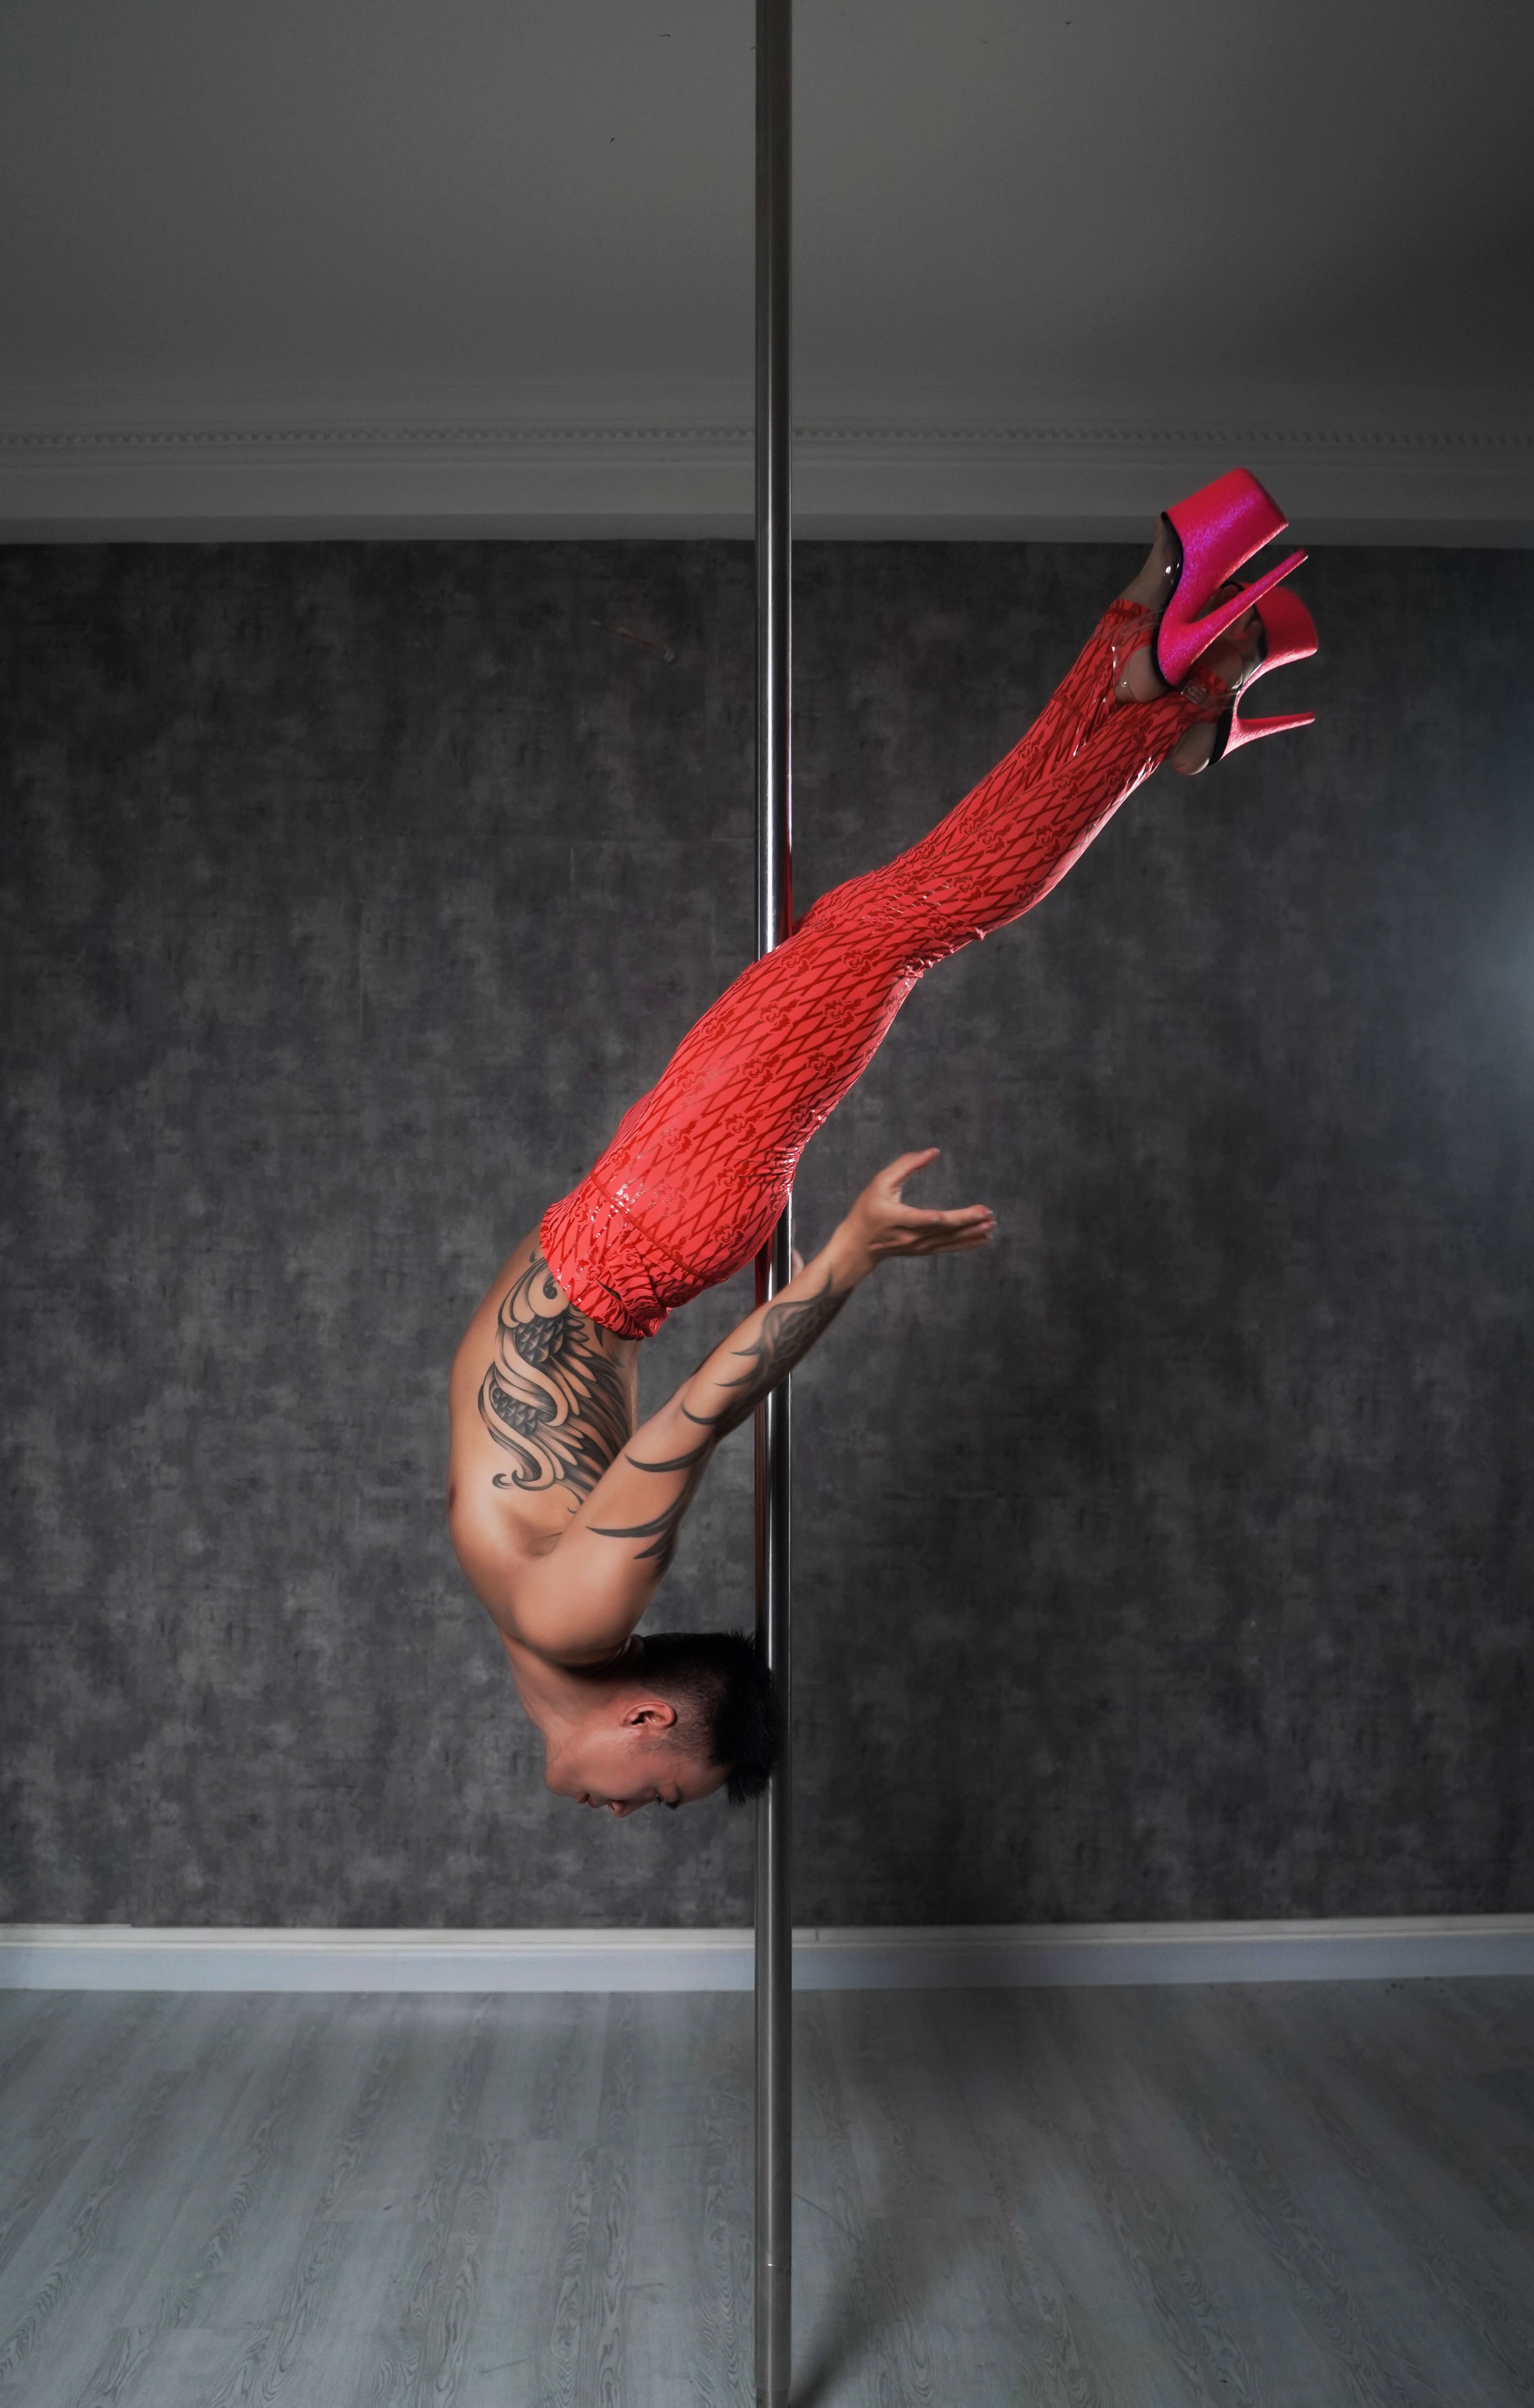 Quan Bui: His Inspiring Pole Dancing Journey Part 2 - Super Fly